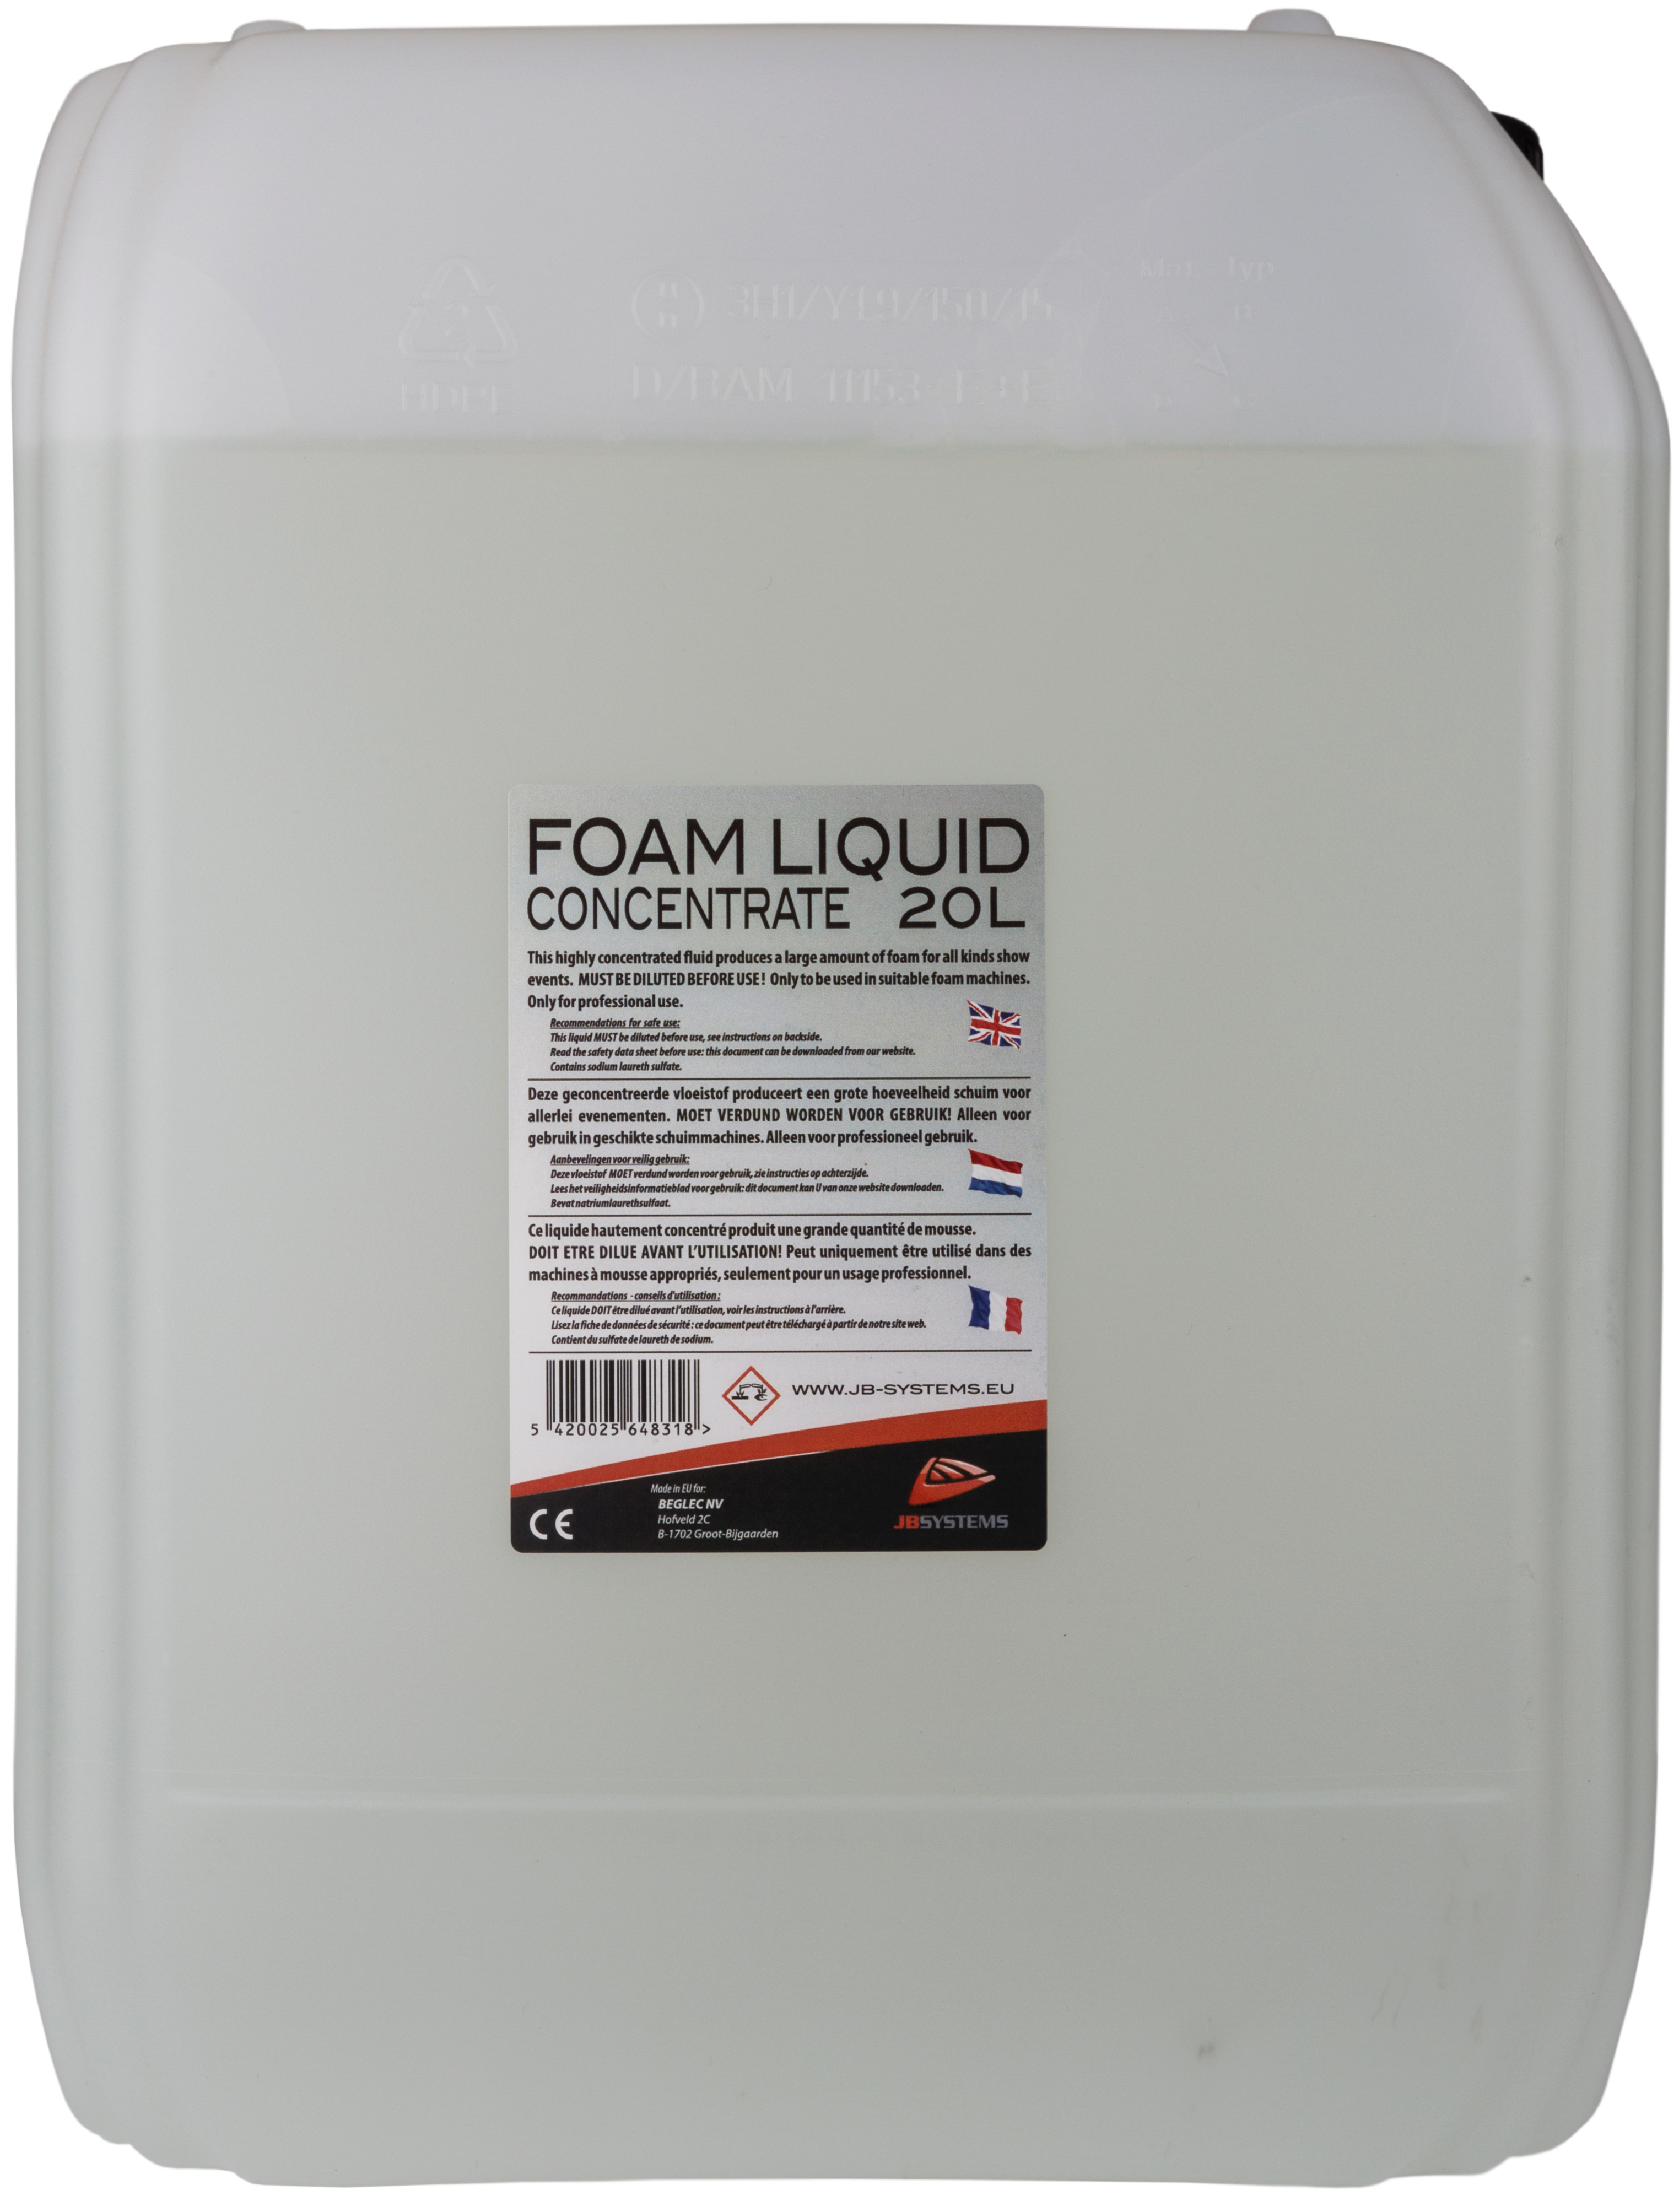 Concentrated foam liquid